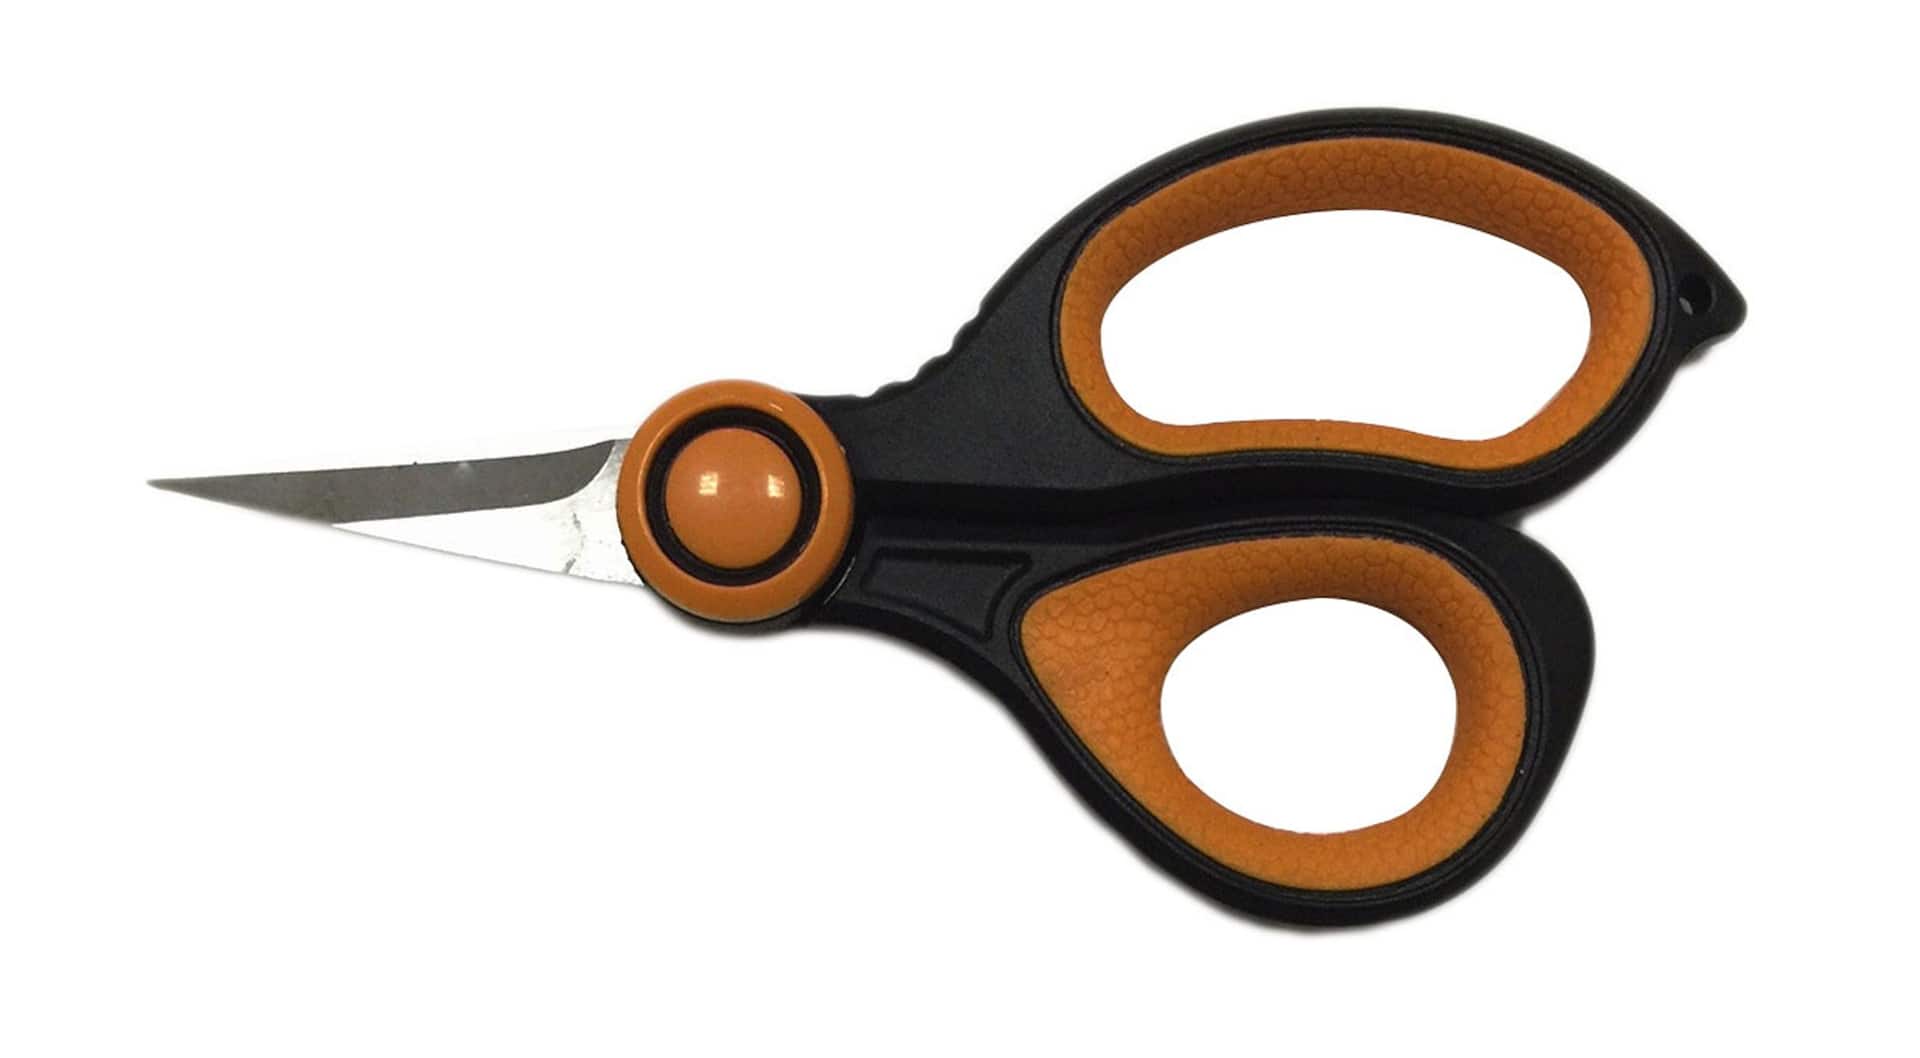 Best budget braided line scissors 